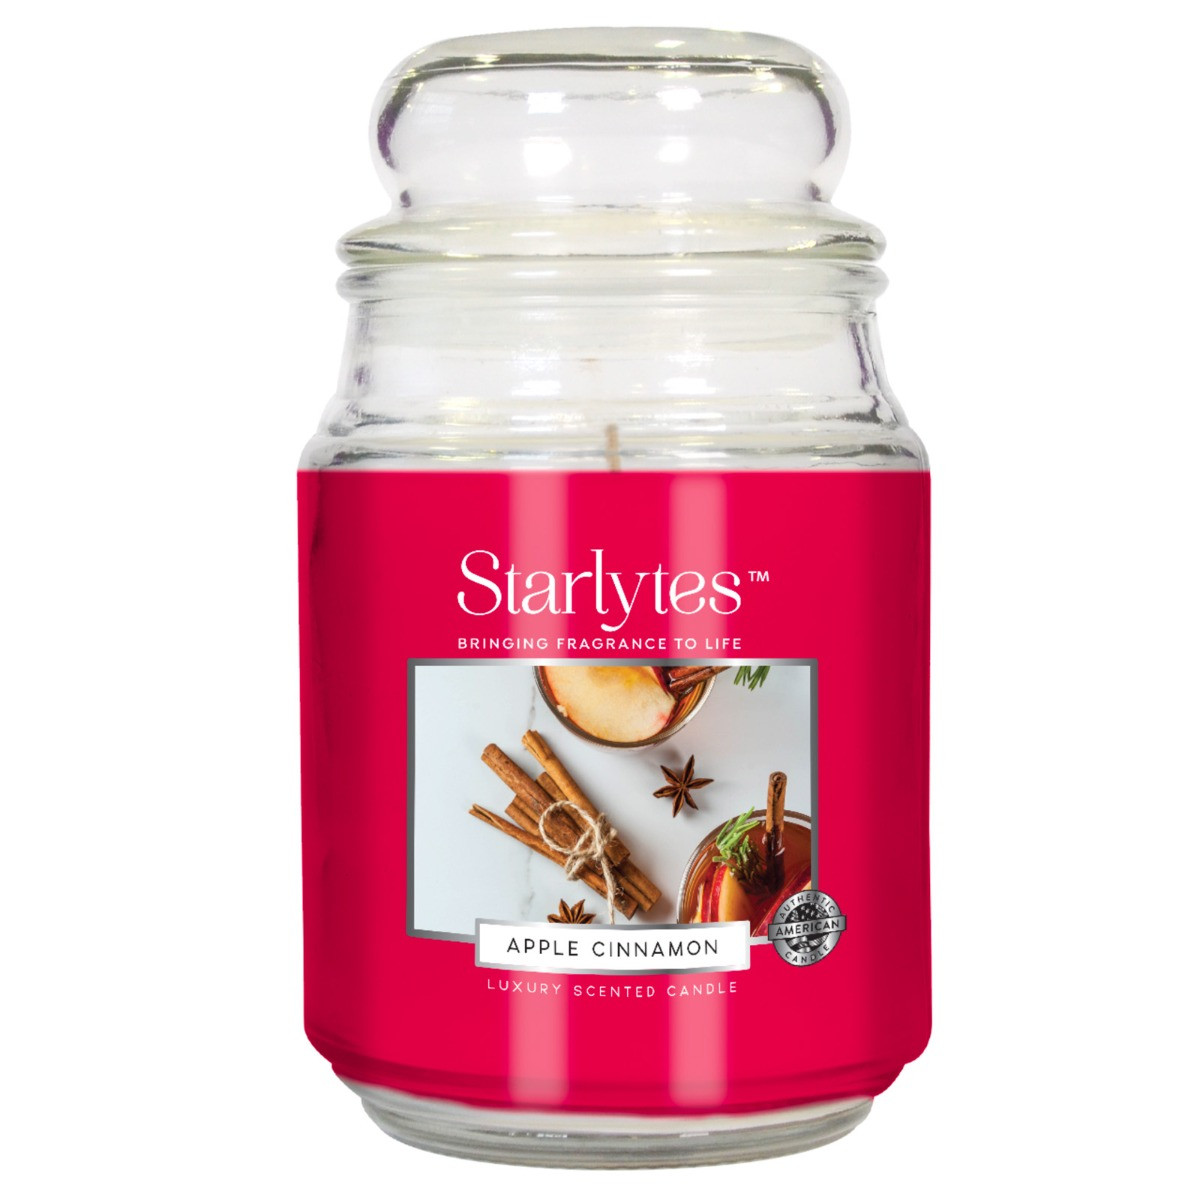 Starlytes 18oz Jar Candle - Apple Cinnamon>